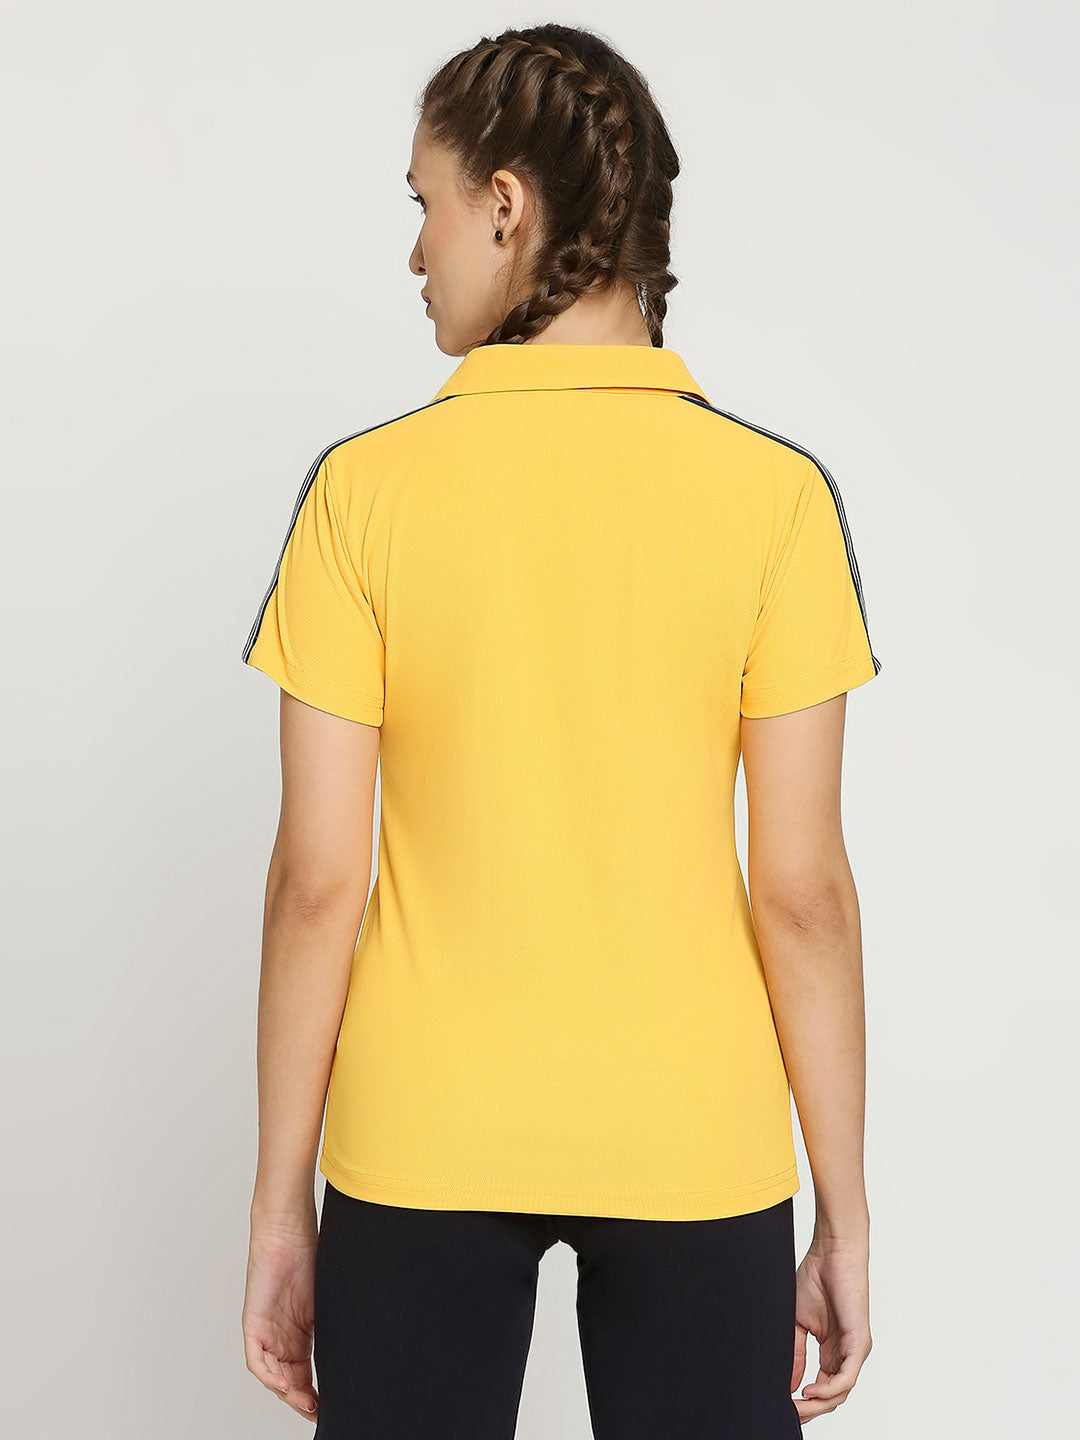 Women's Yellow Golf Polo - 1